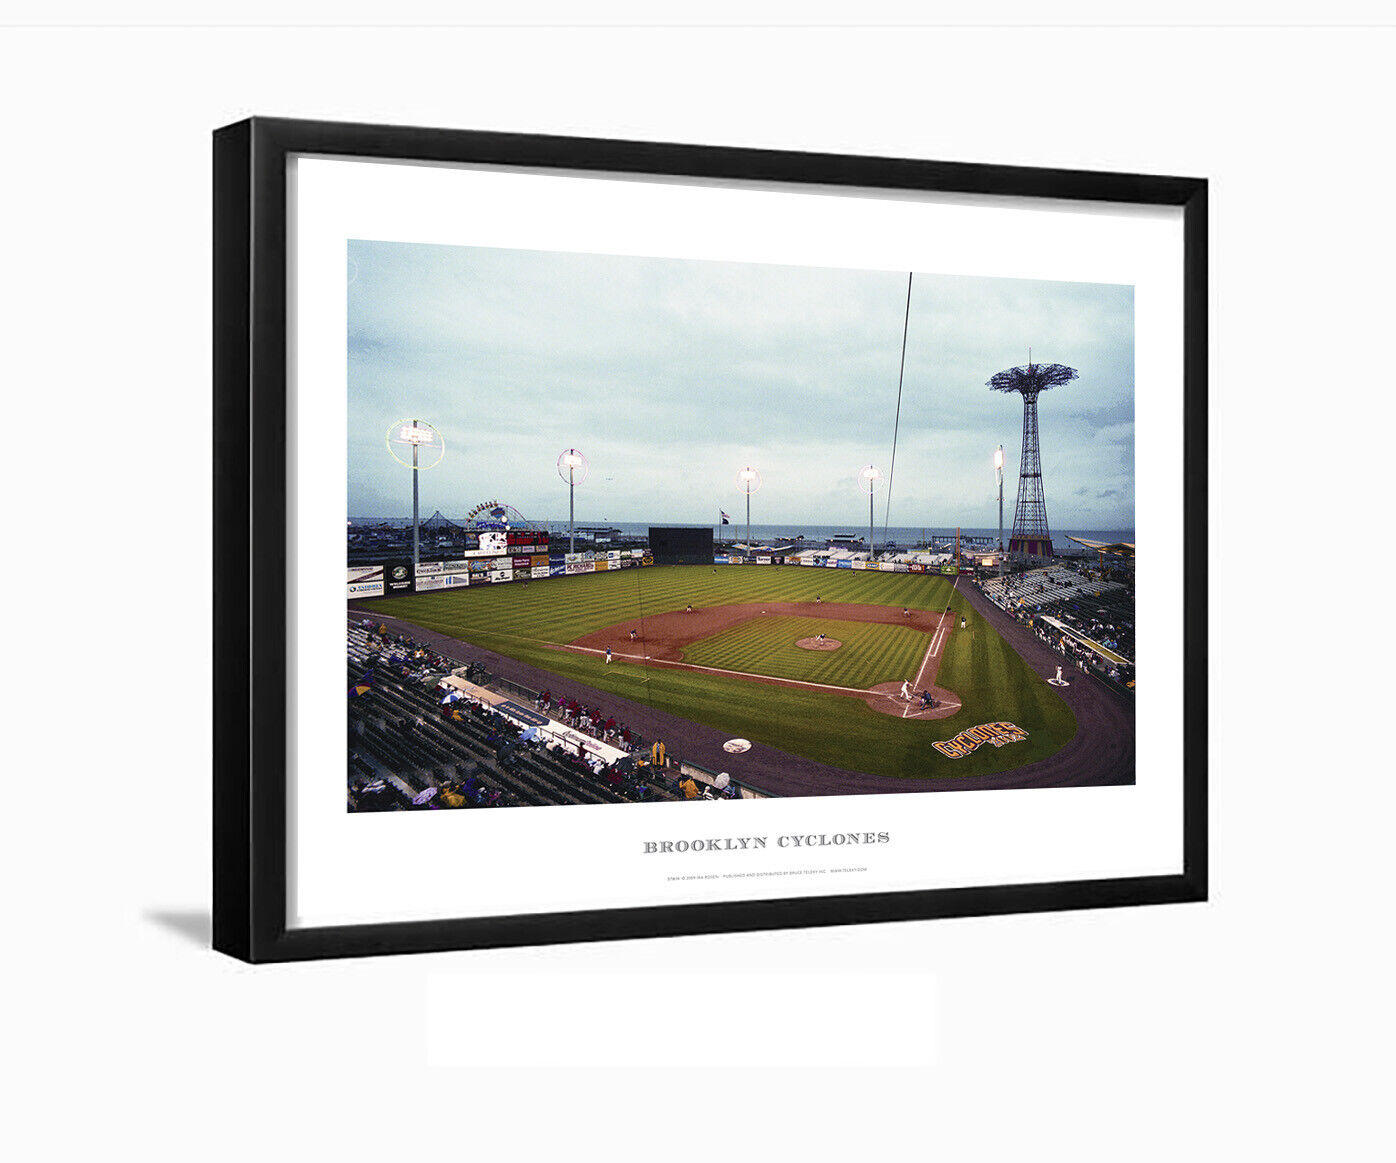 Brooklyn Cyclones Baseball Stadium Photo Framed Ready to Hang 8